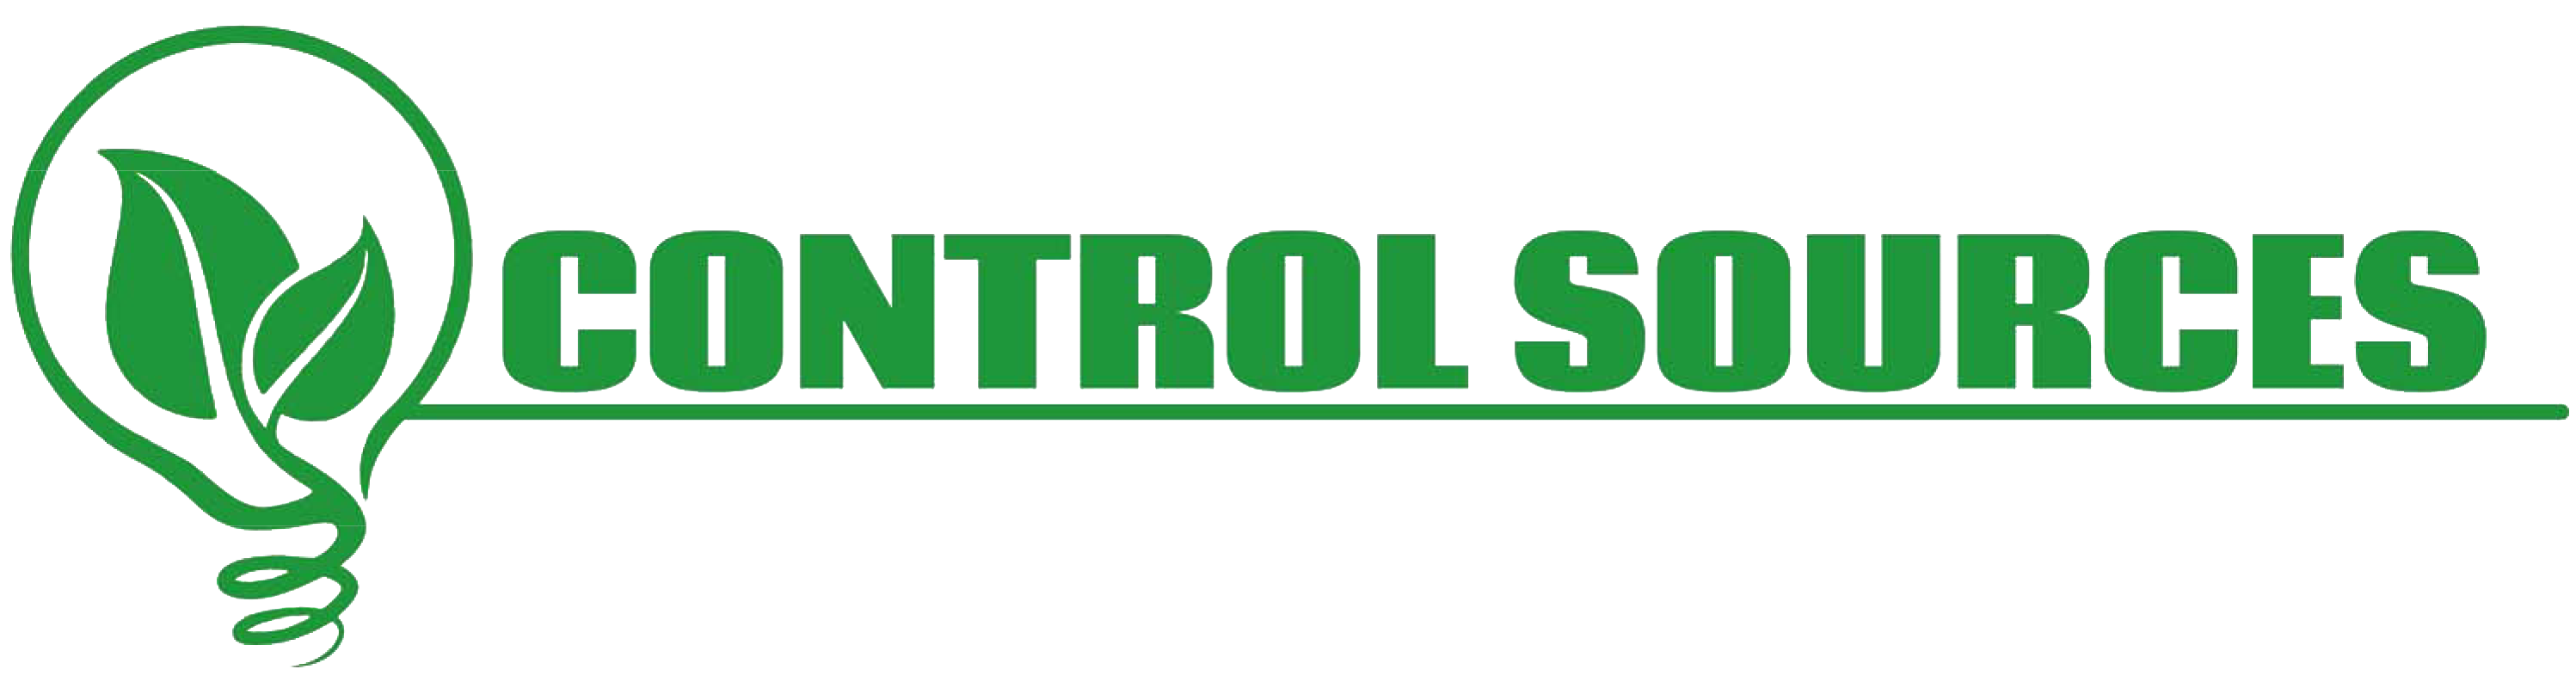 Control Sources LLC logo